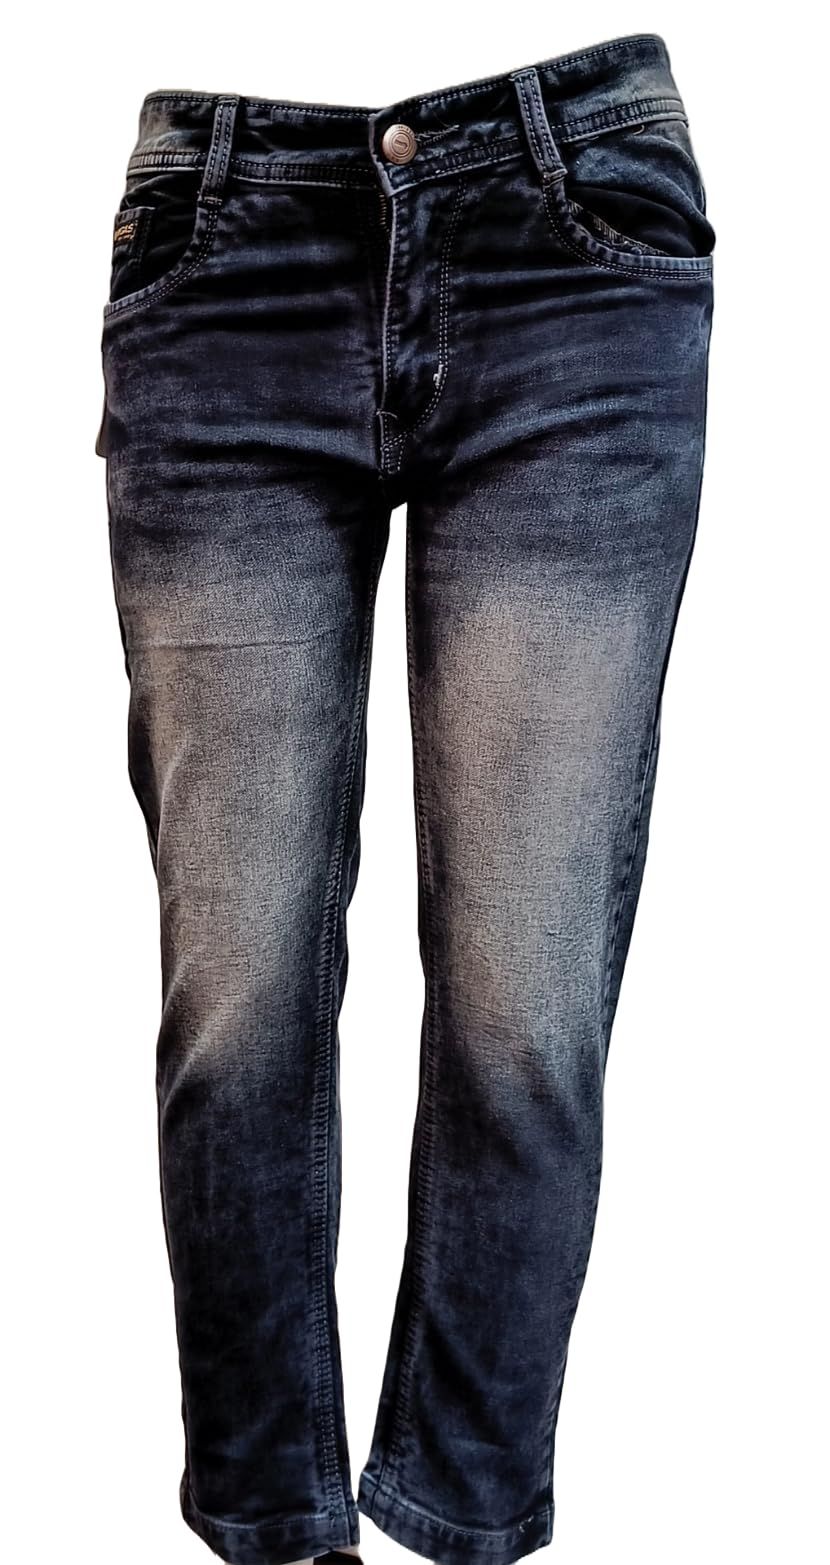 Jeans Ancle Length Cotton by Cotton streachable Dark Blue